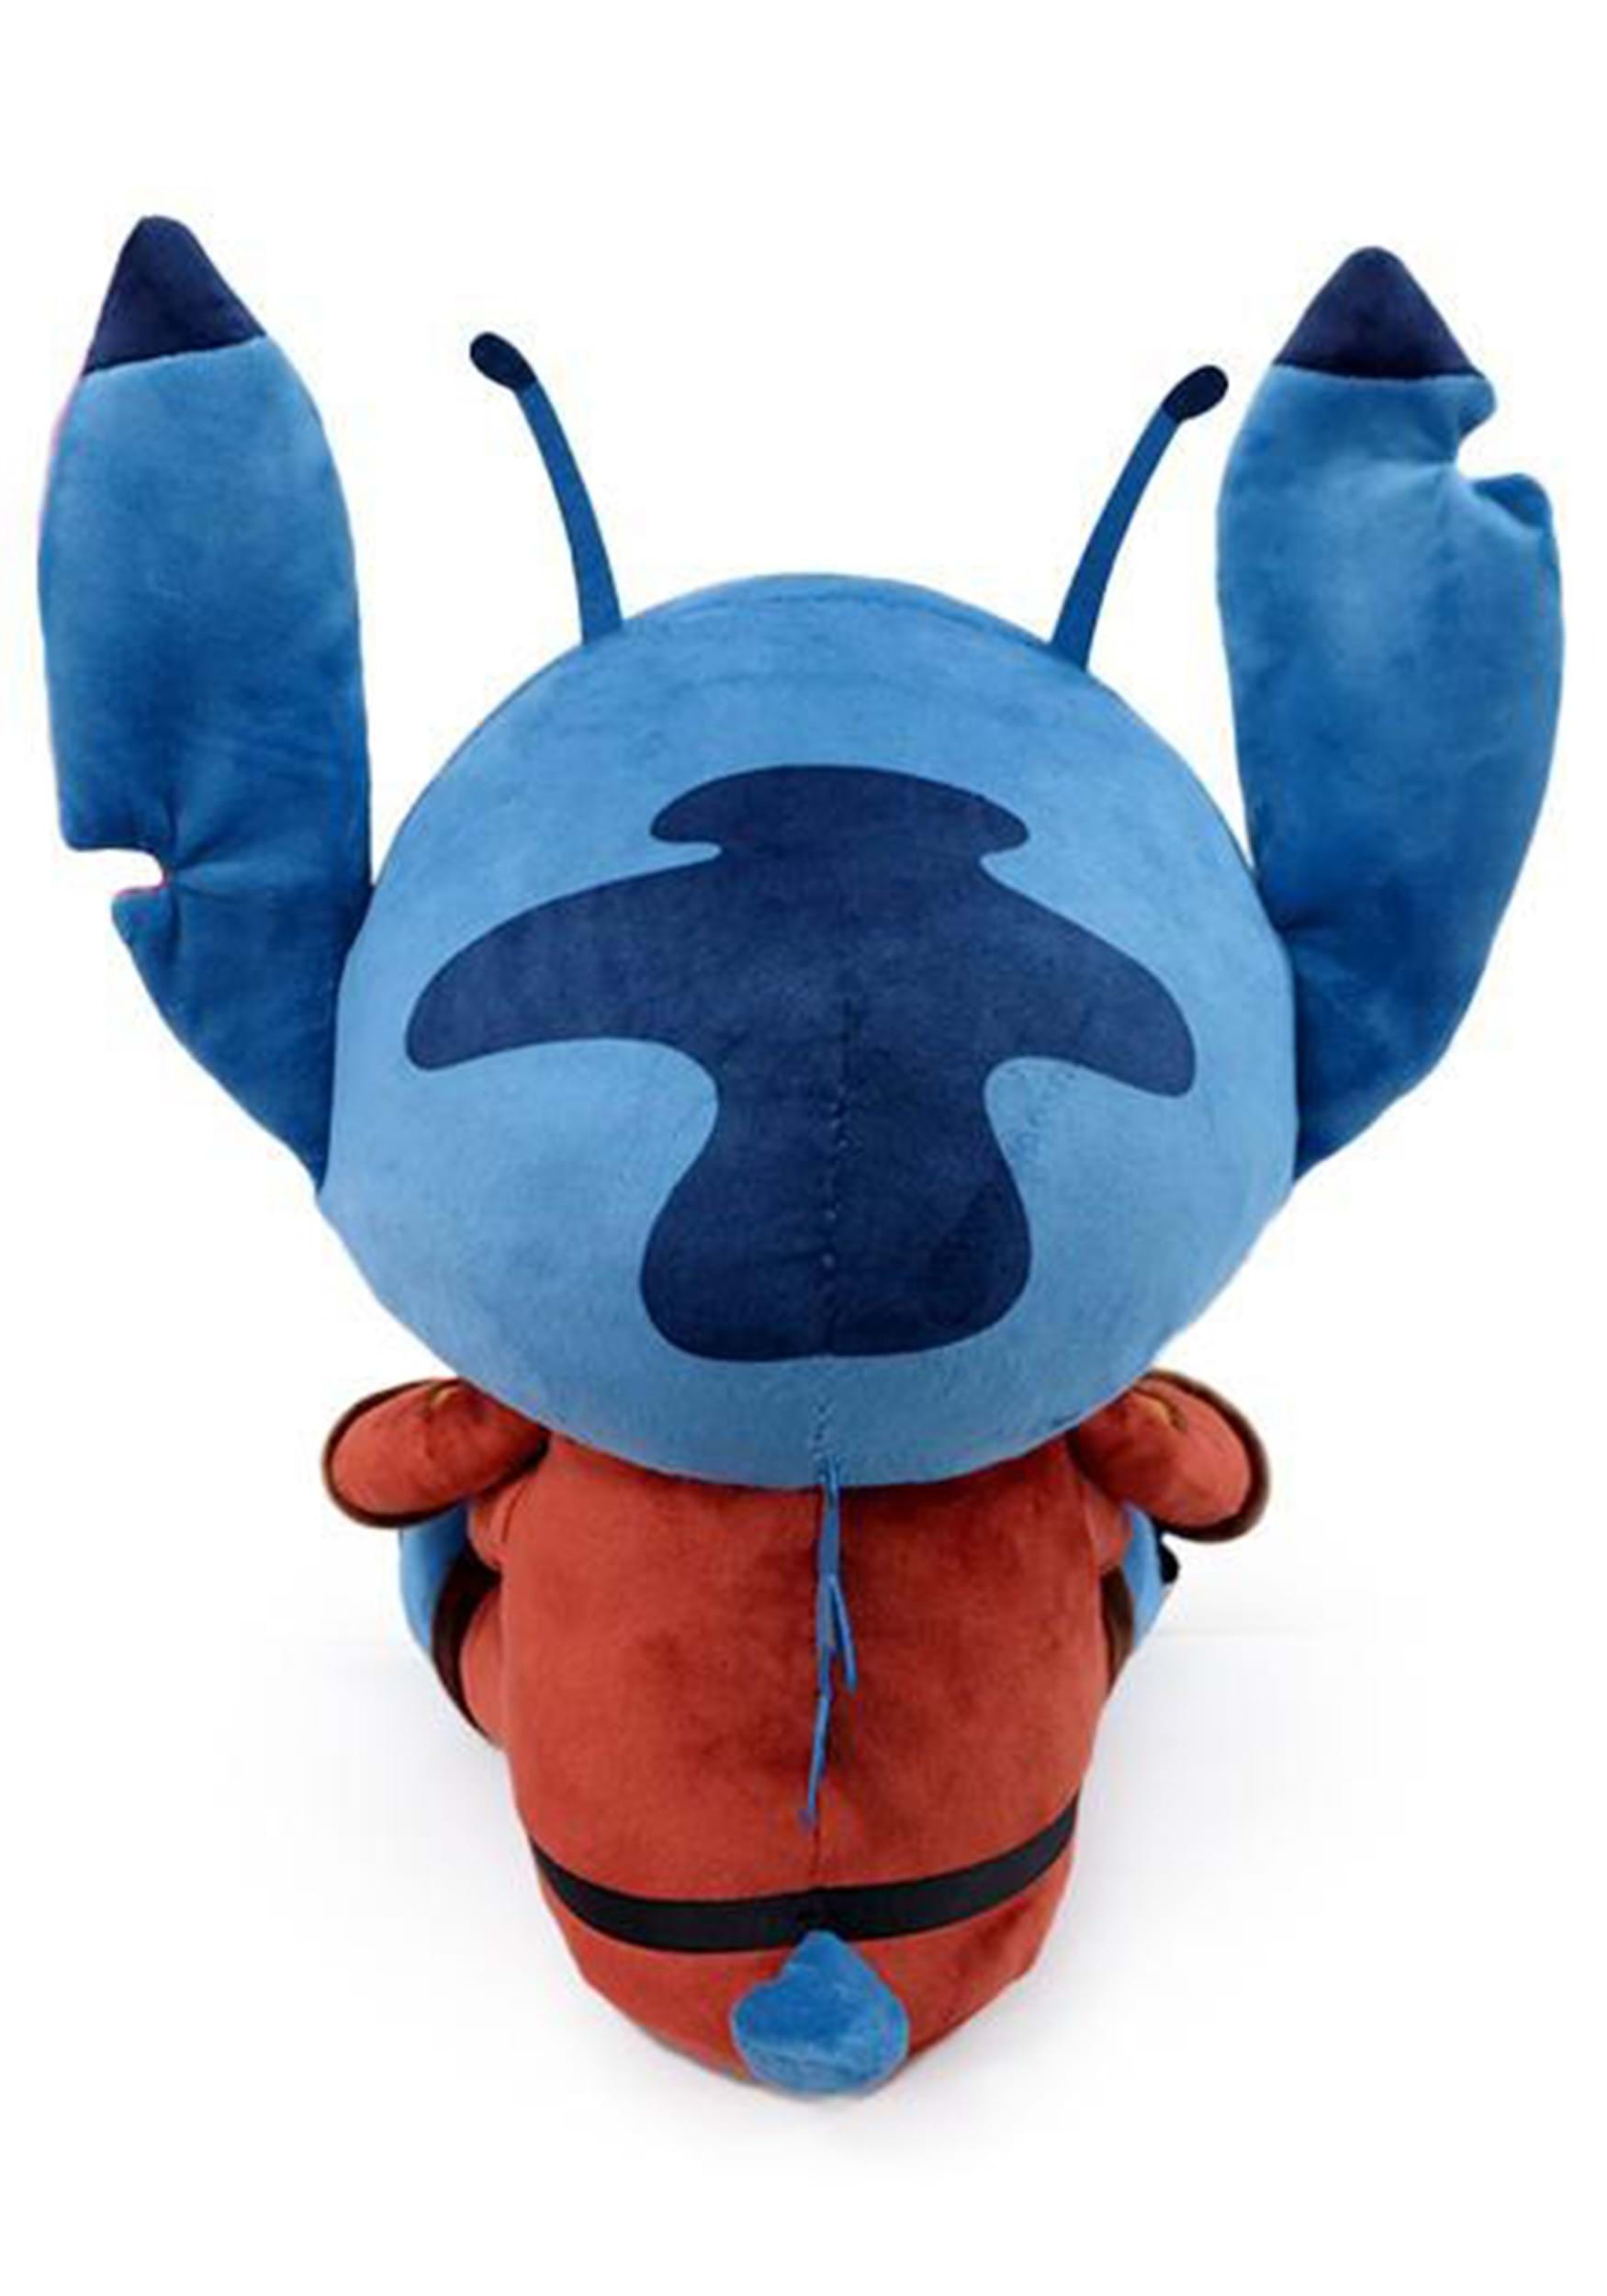 Disney Stitch Plush from Lilo and Stitch Stuffed Animal Toy 16